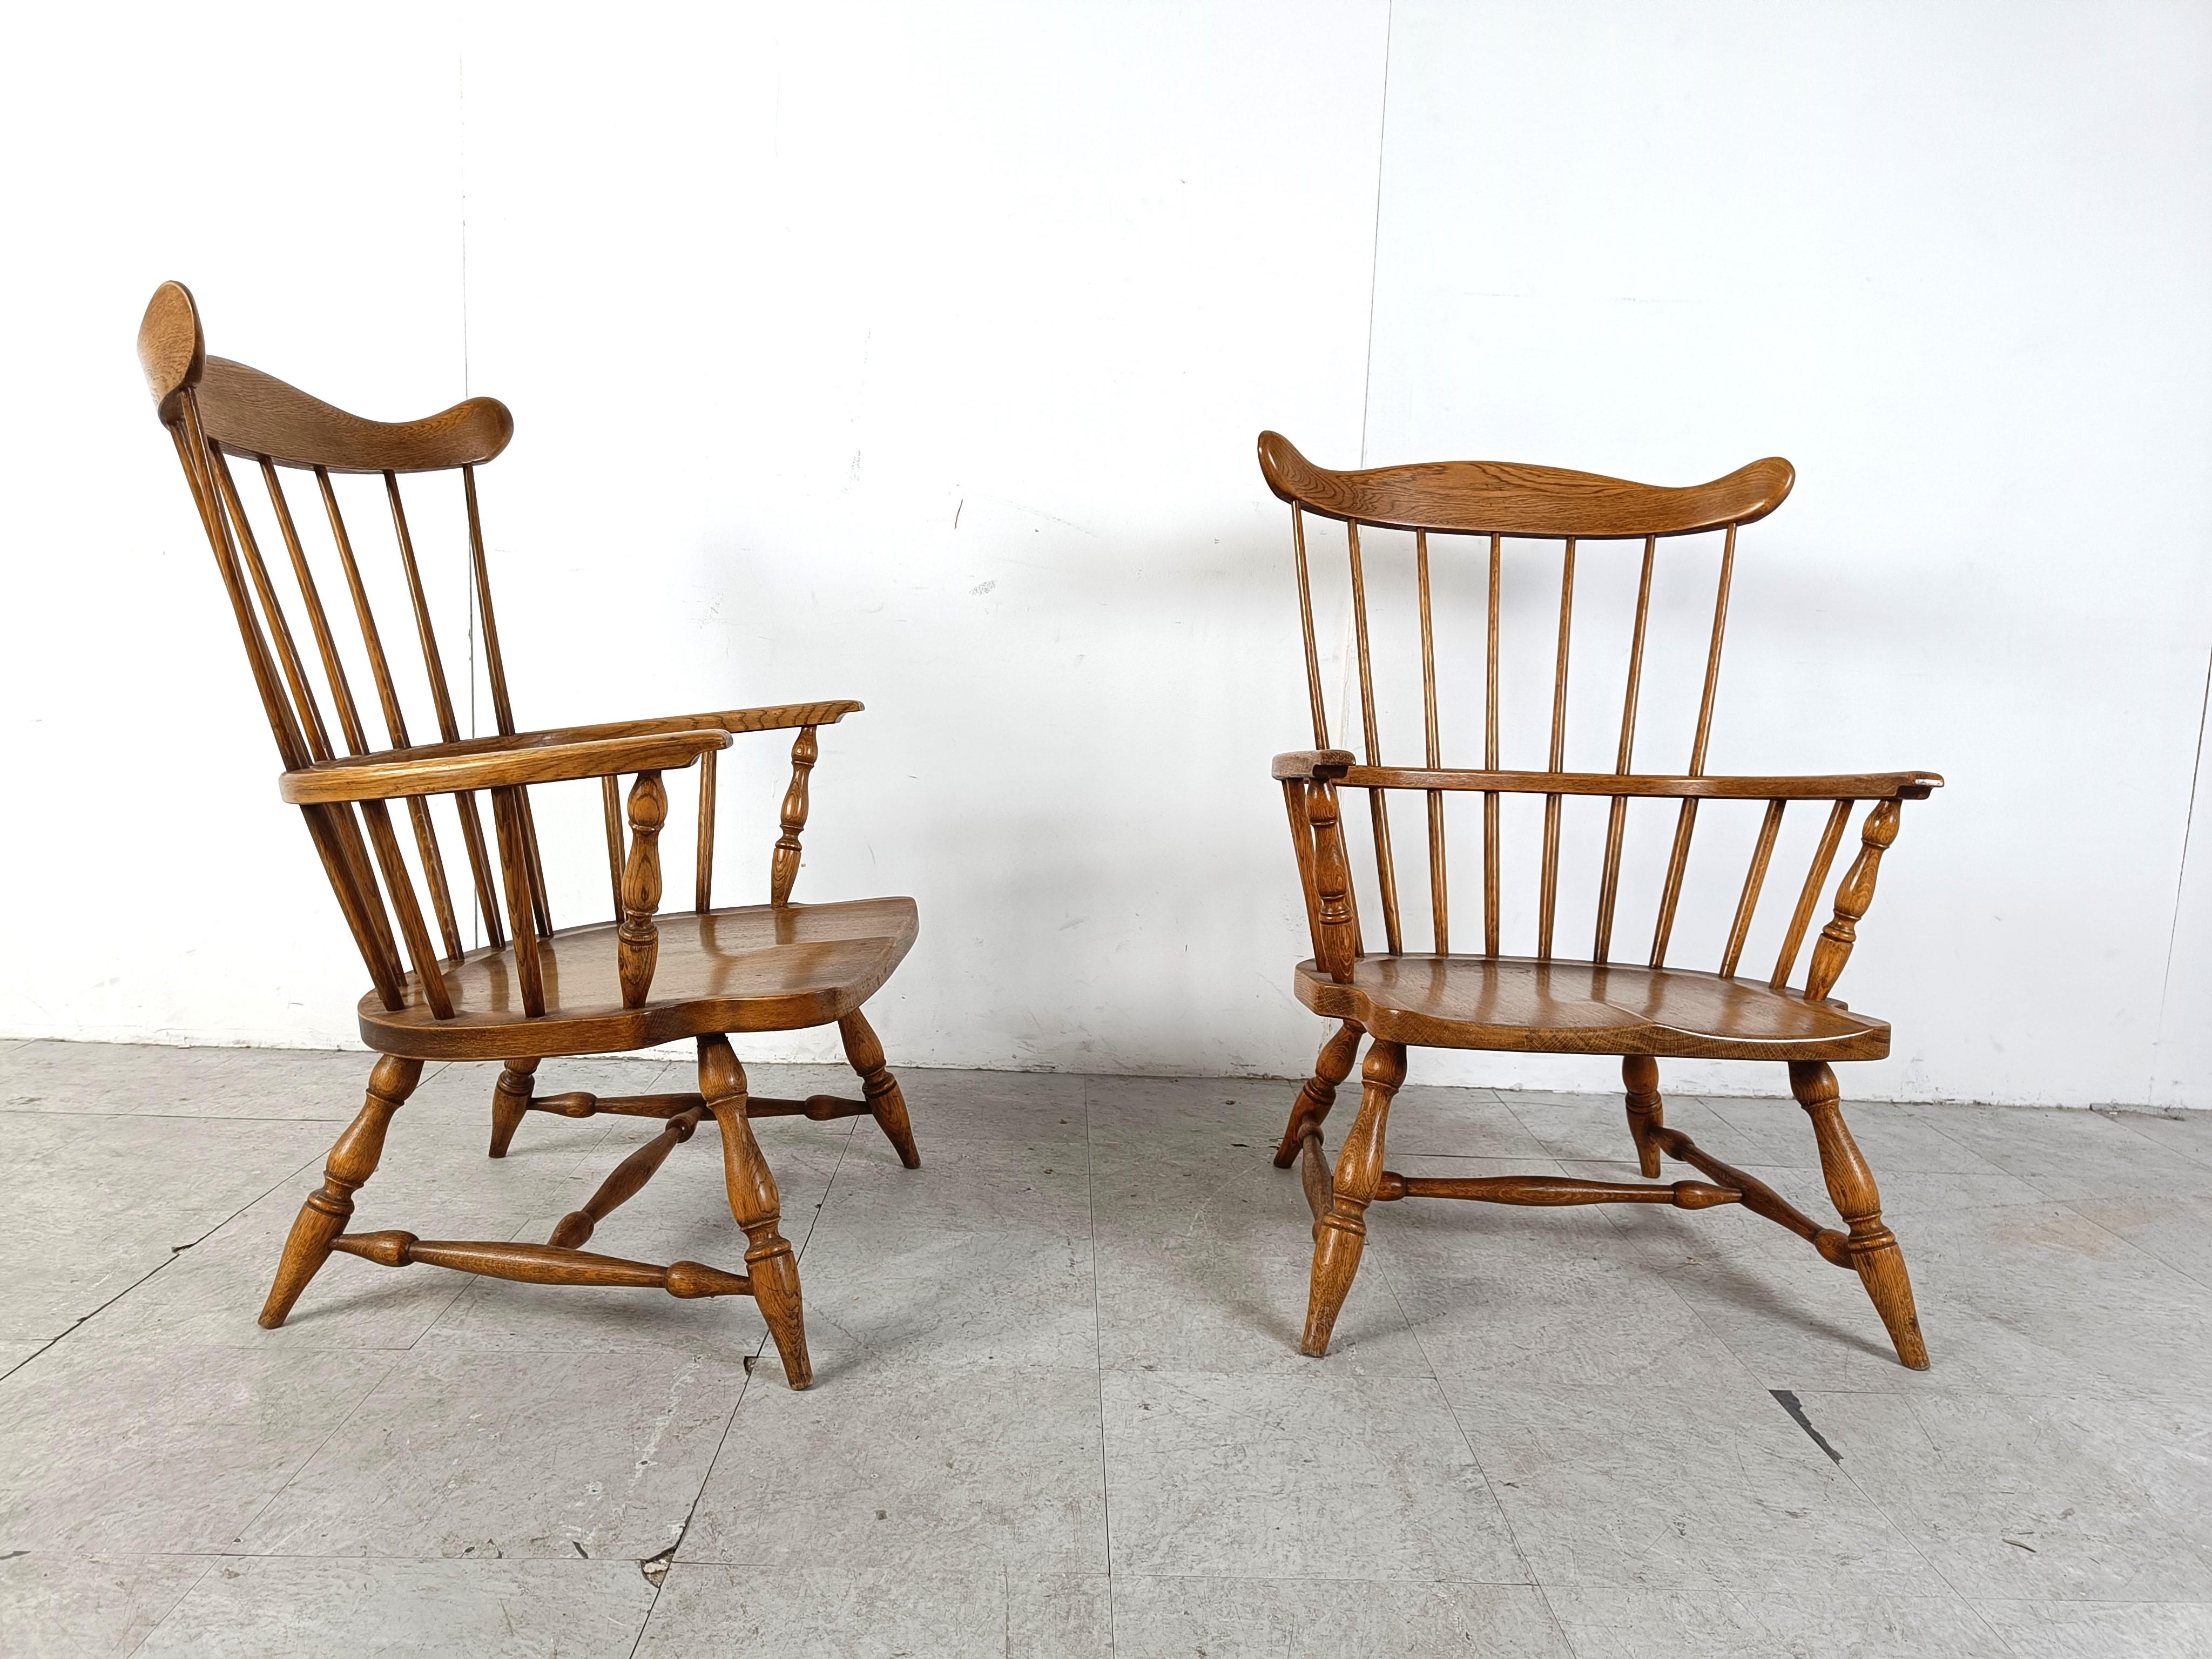 Wood 20th century English Windsor armchairs, set of 2